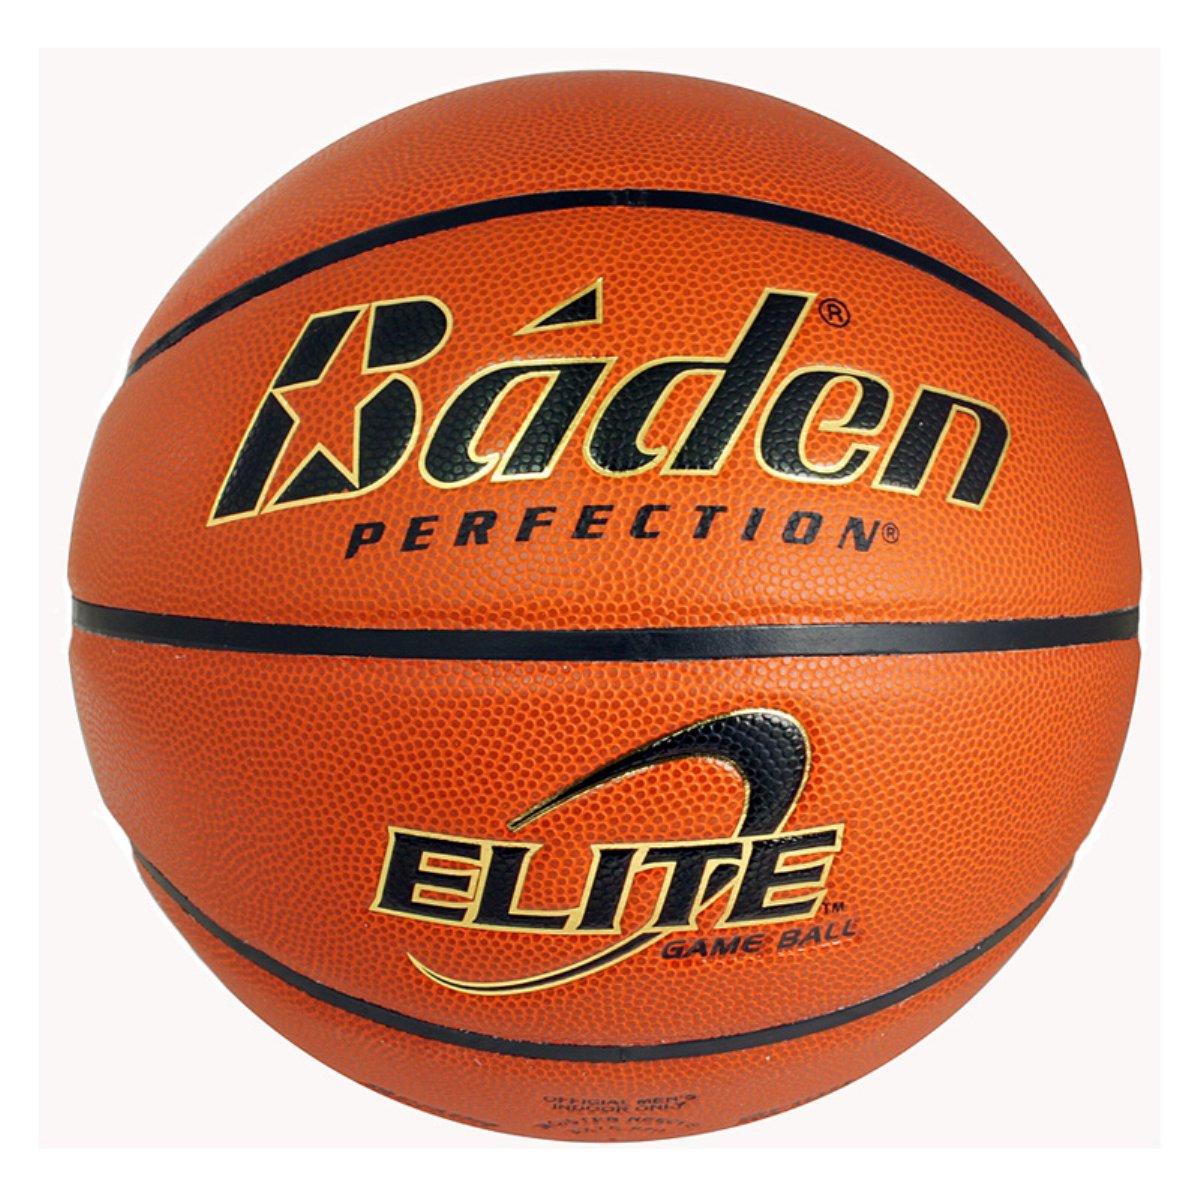 Basketballs for Sale | Shop Basketball Equipment & Supplies at ...